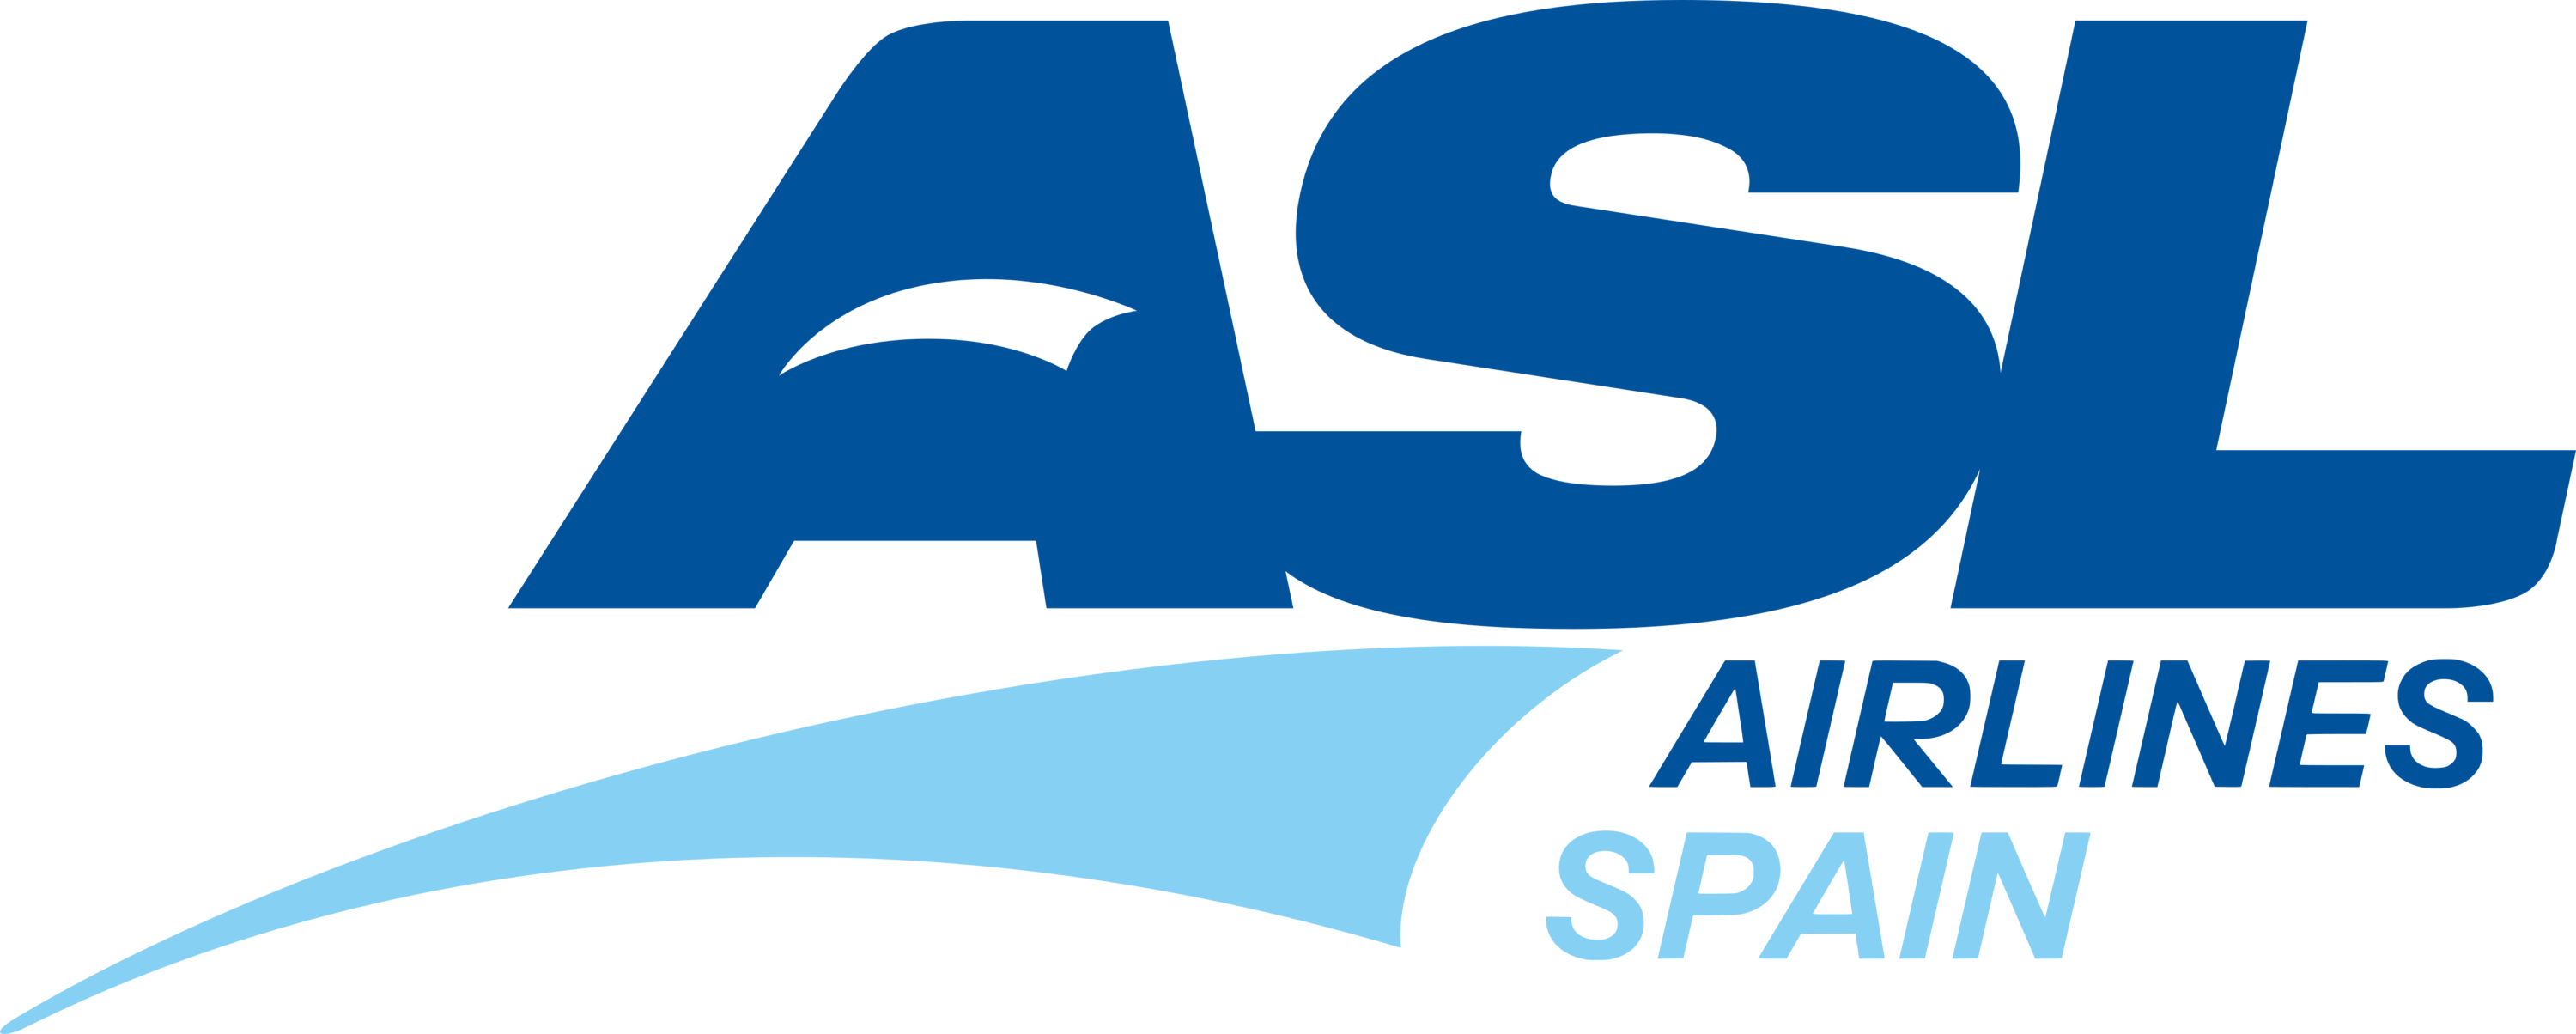 ASL Airlines Spain Logo